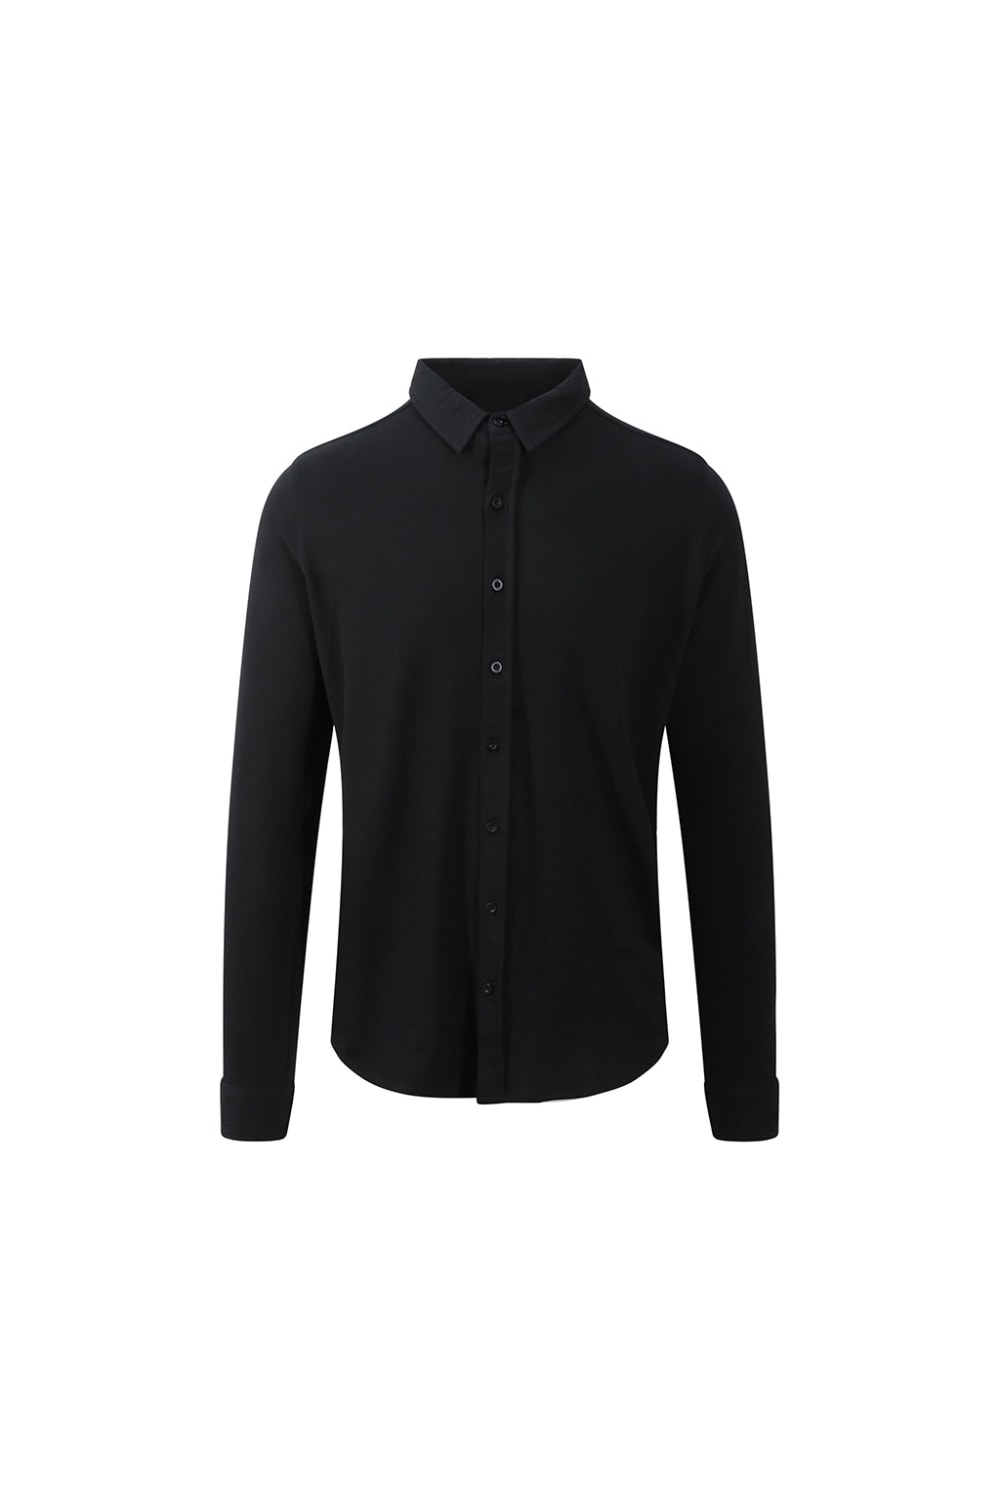 So Denim Mens Oscar Knitted Long Sleeve Shirt - Black